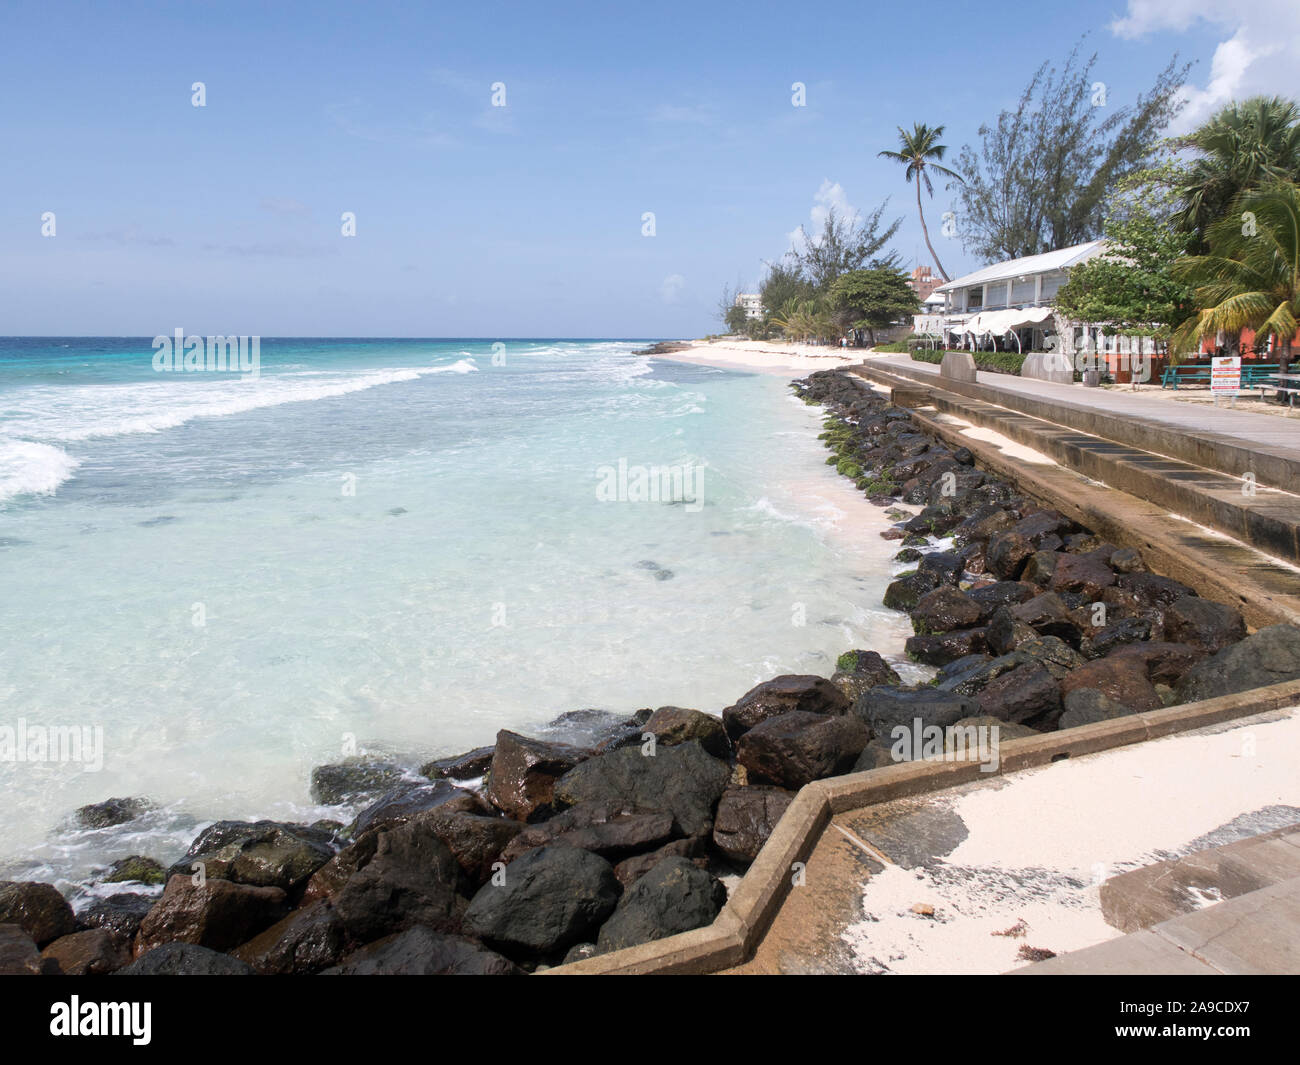 Hastings Rock beach near Bridgetown on the Caribbean island of Barbados Stock Photo